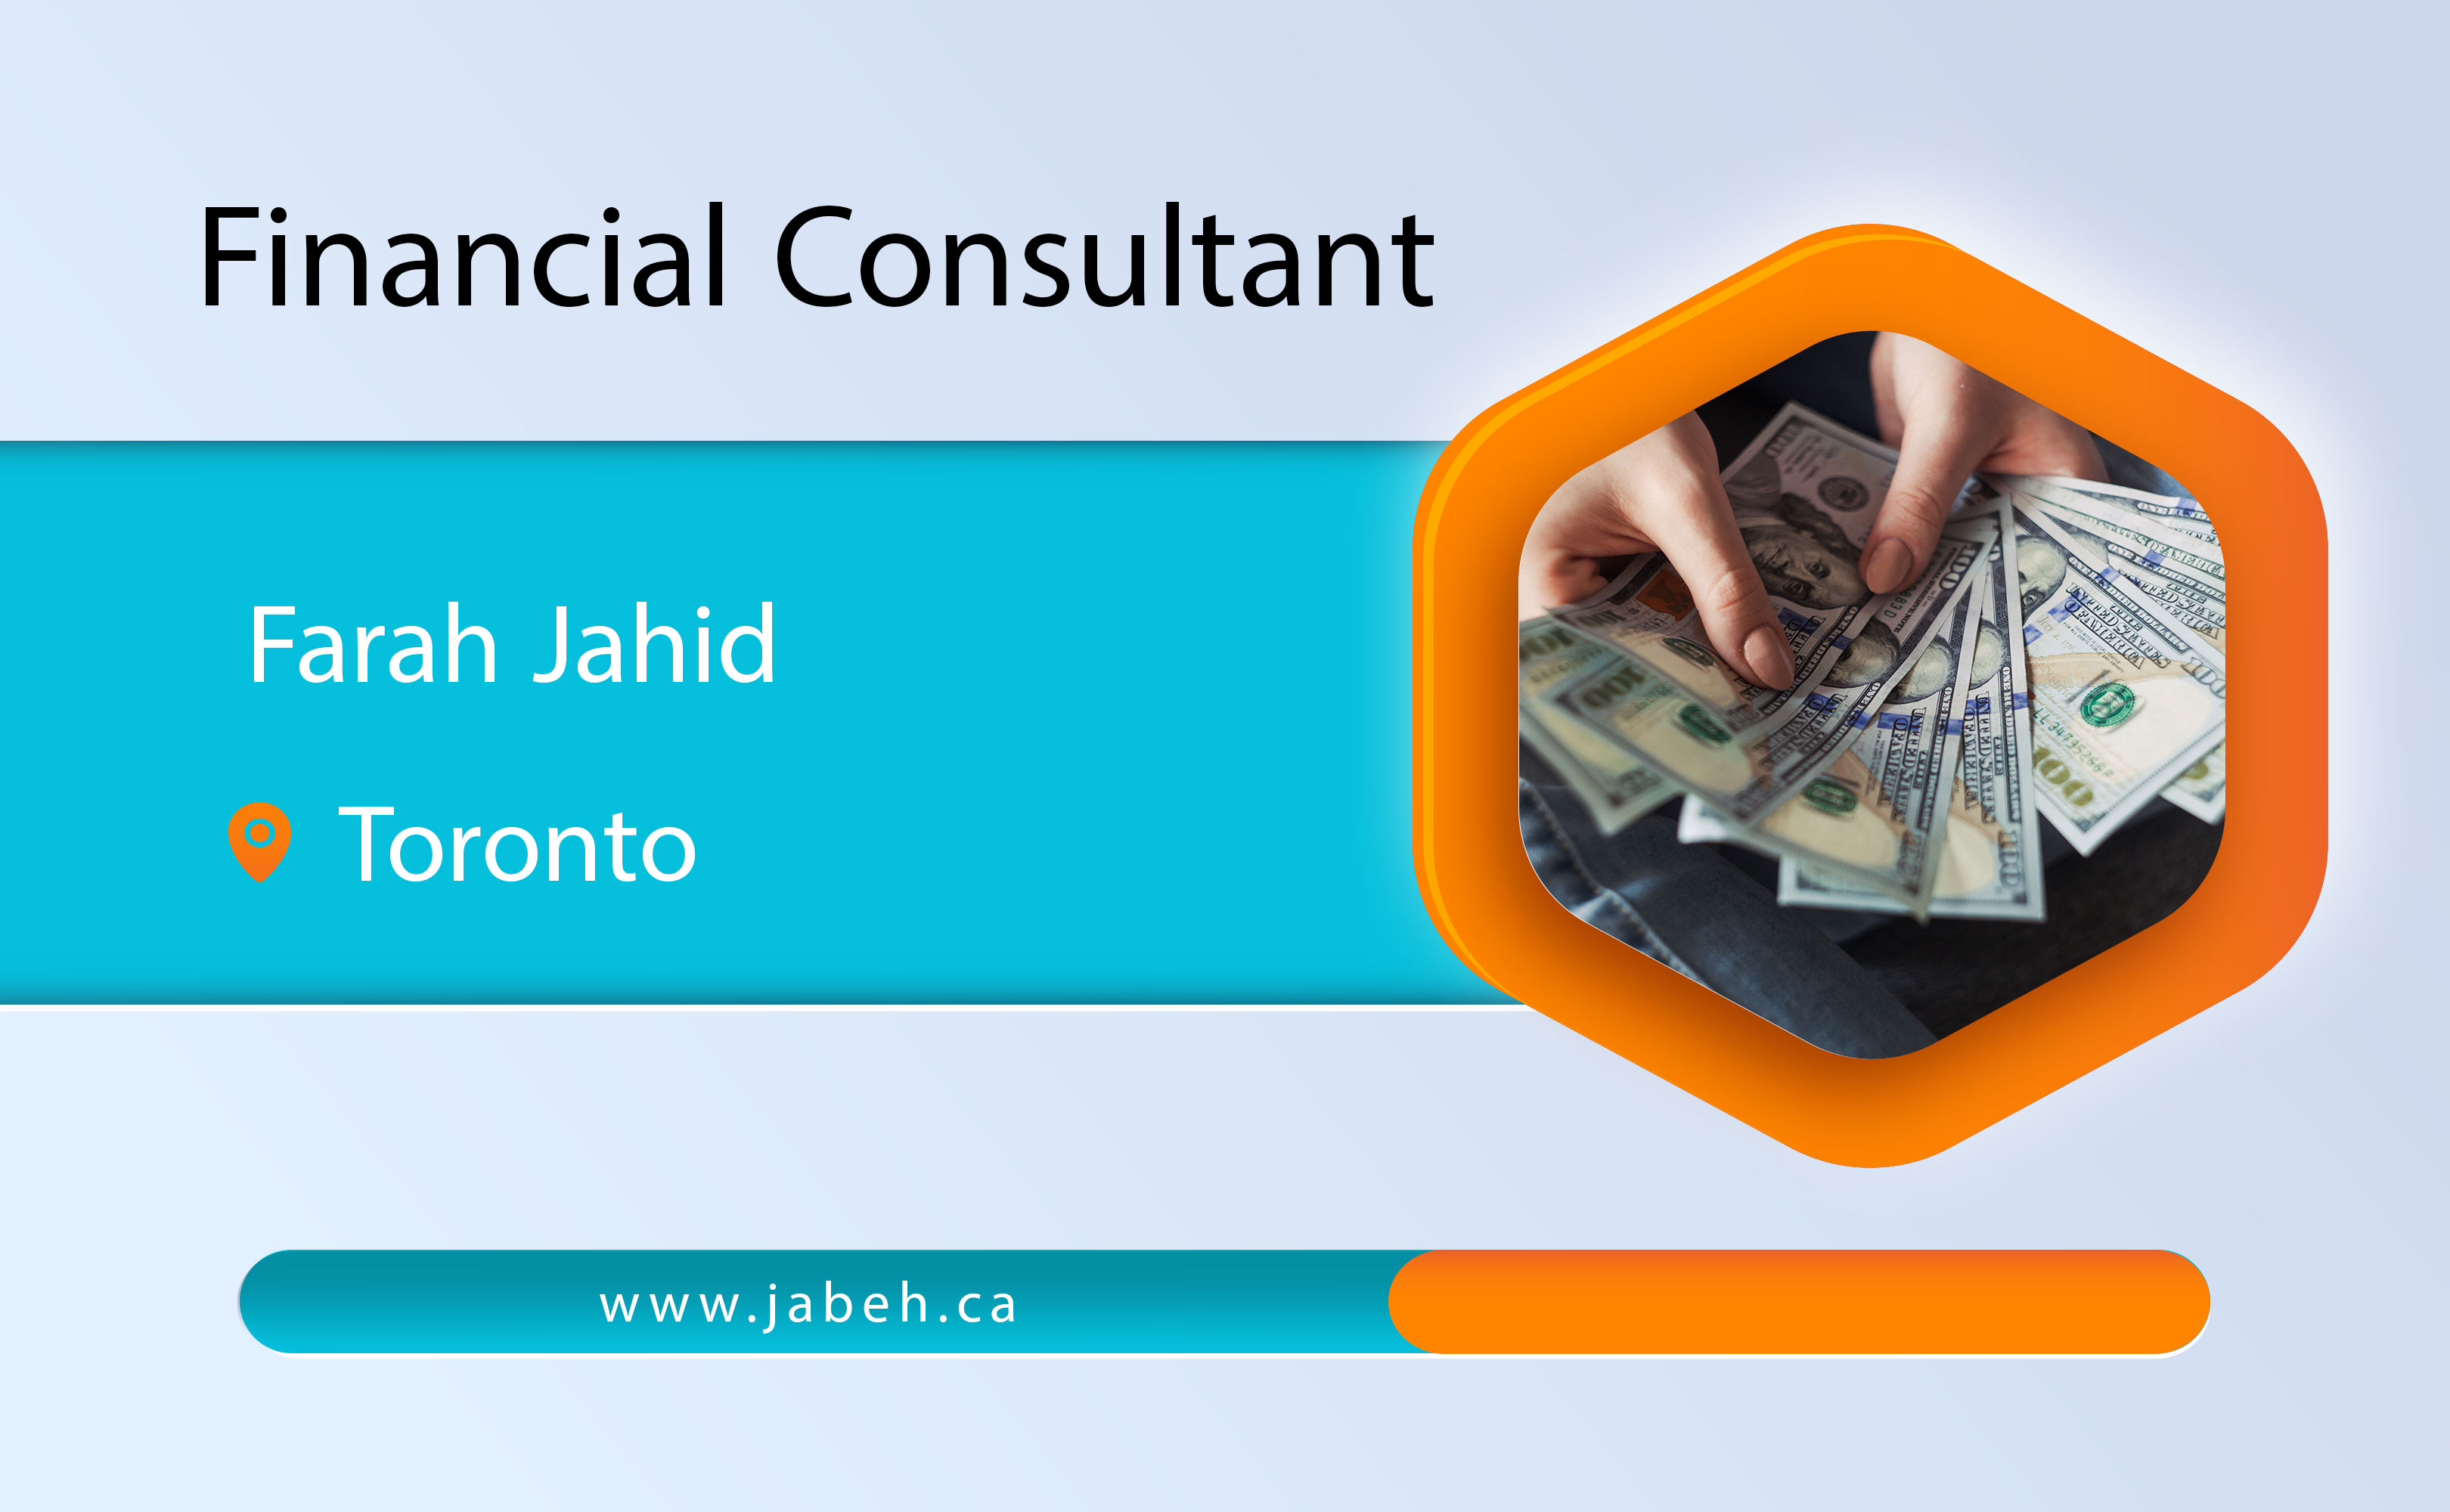 Farah Jahid's financial advisor in Toronto